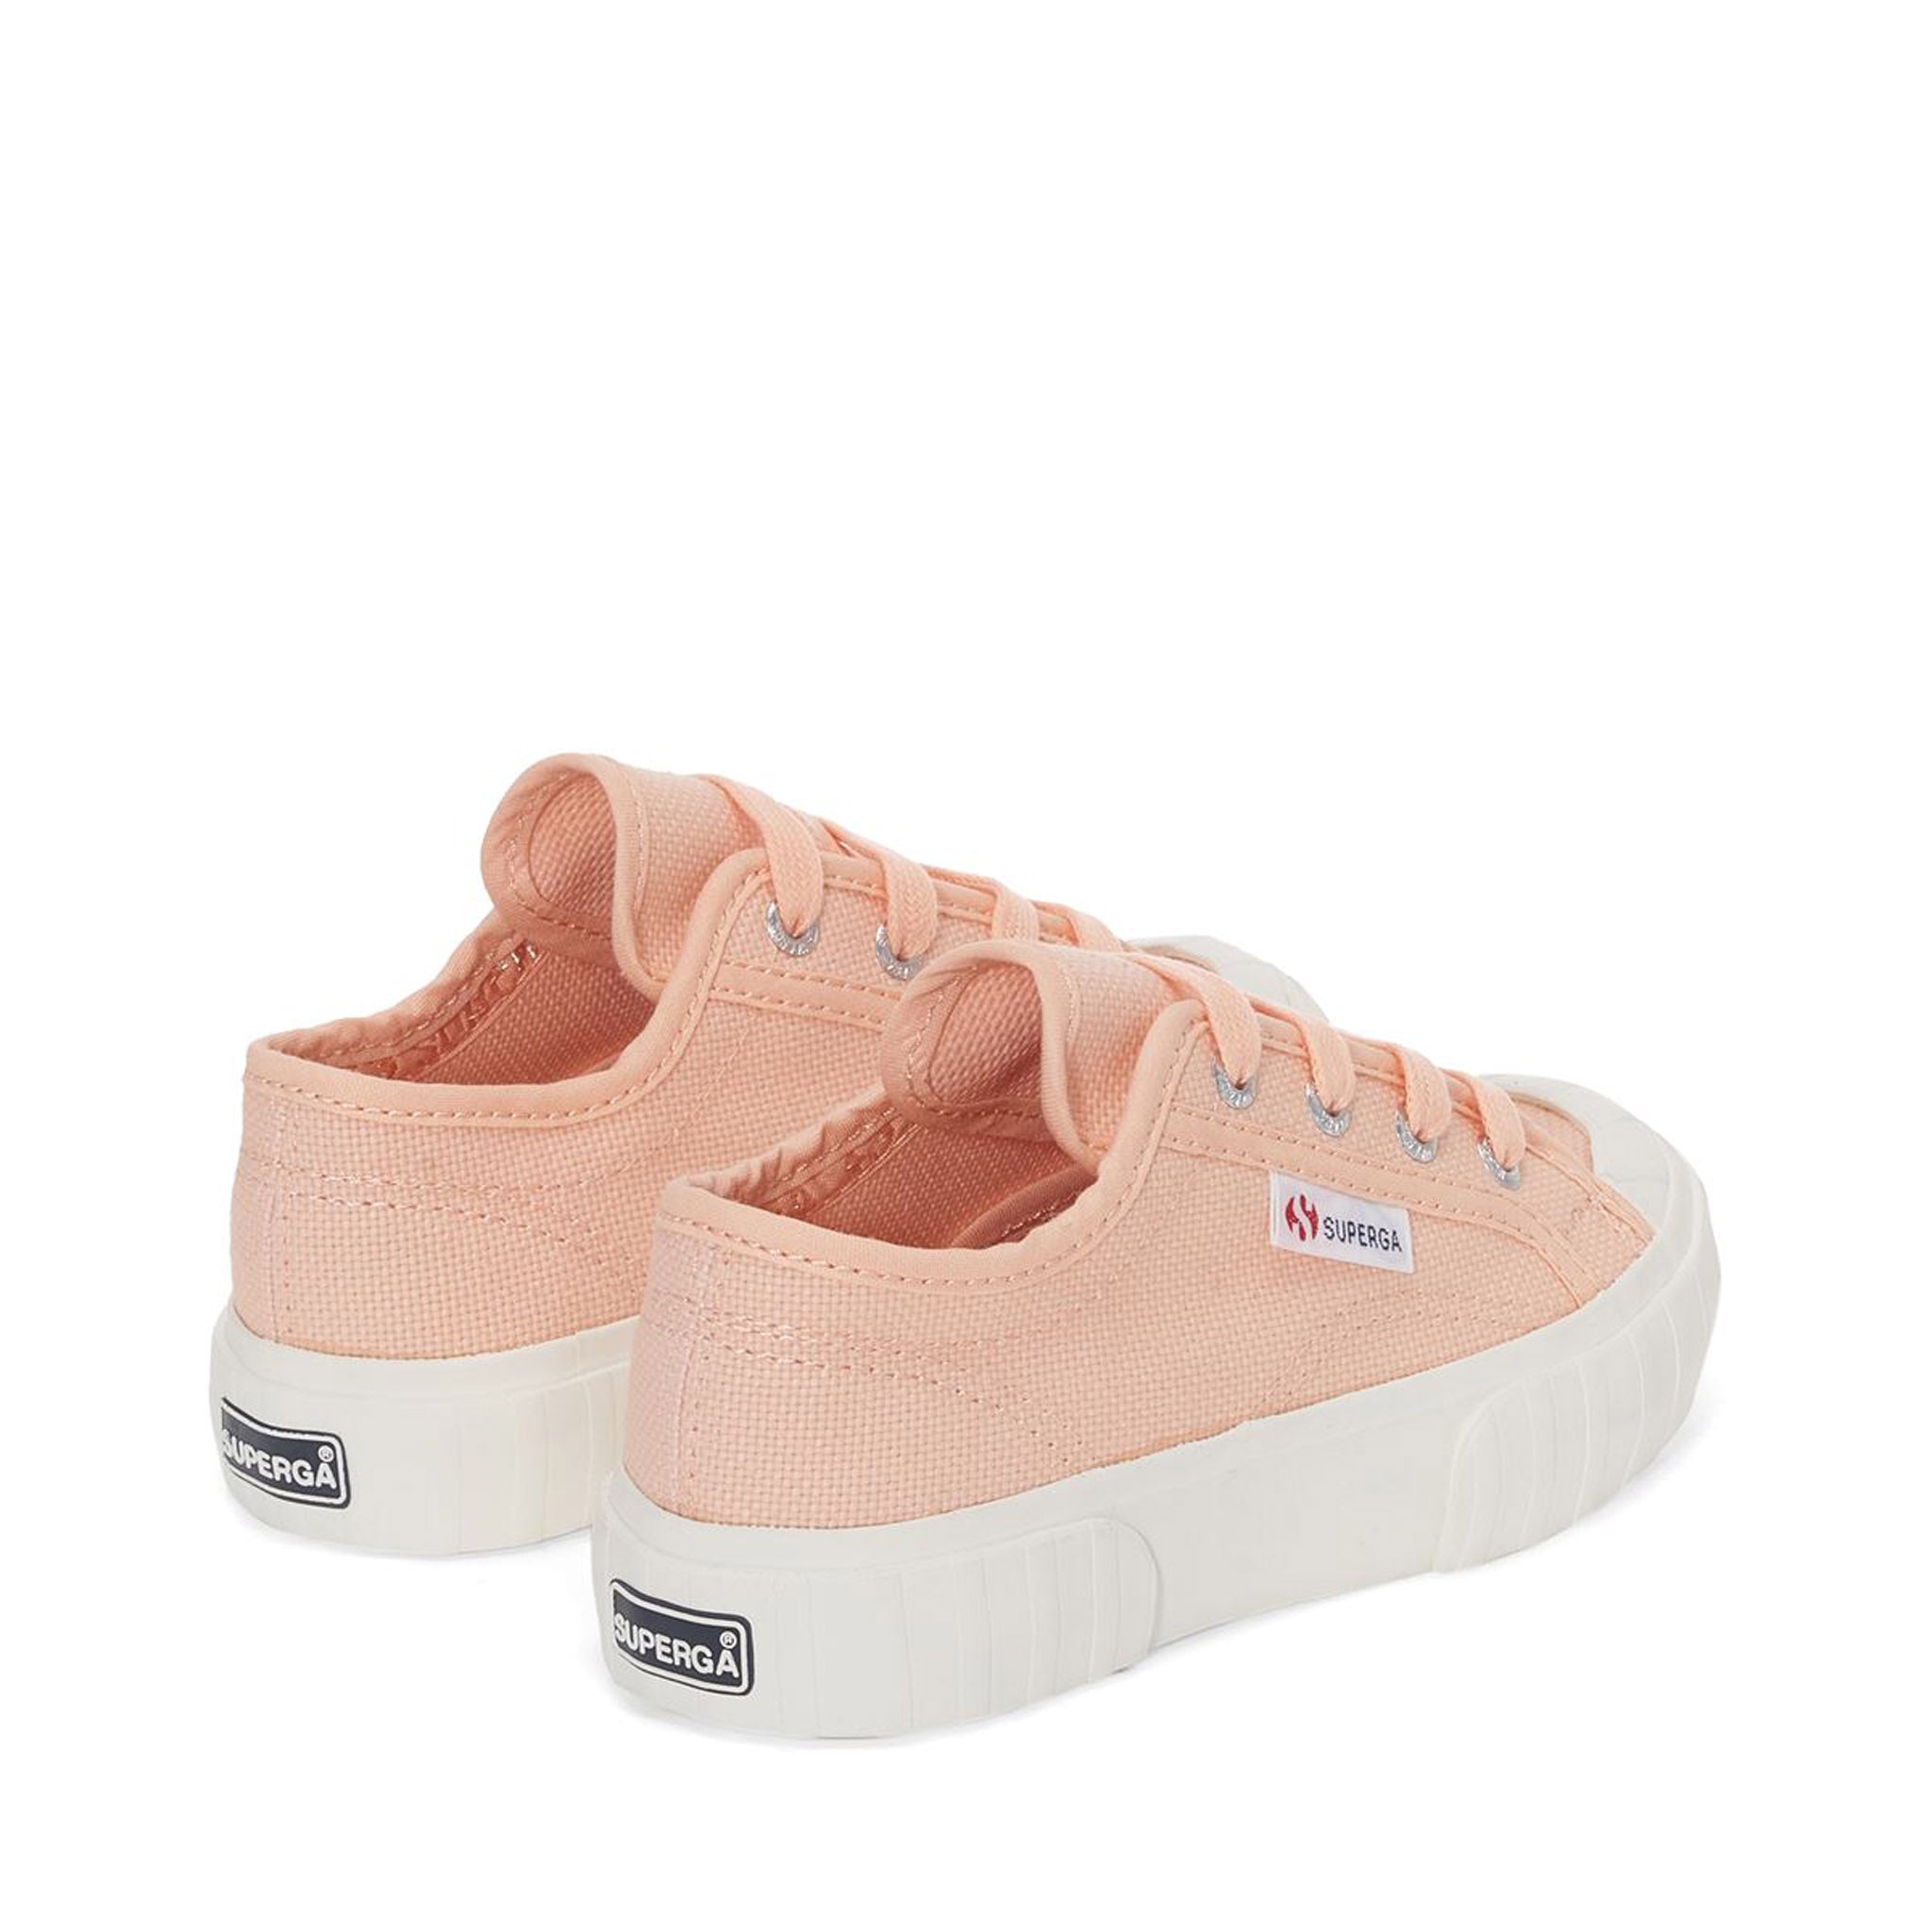 Superga 2630 Kids Stripe Sneakers - Pink Peach Avorio. Back view.